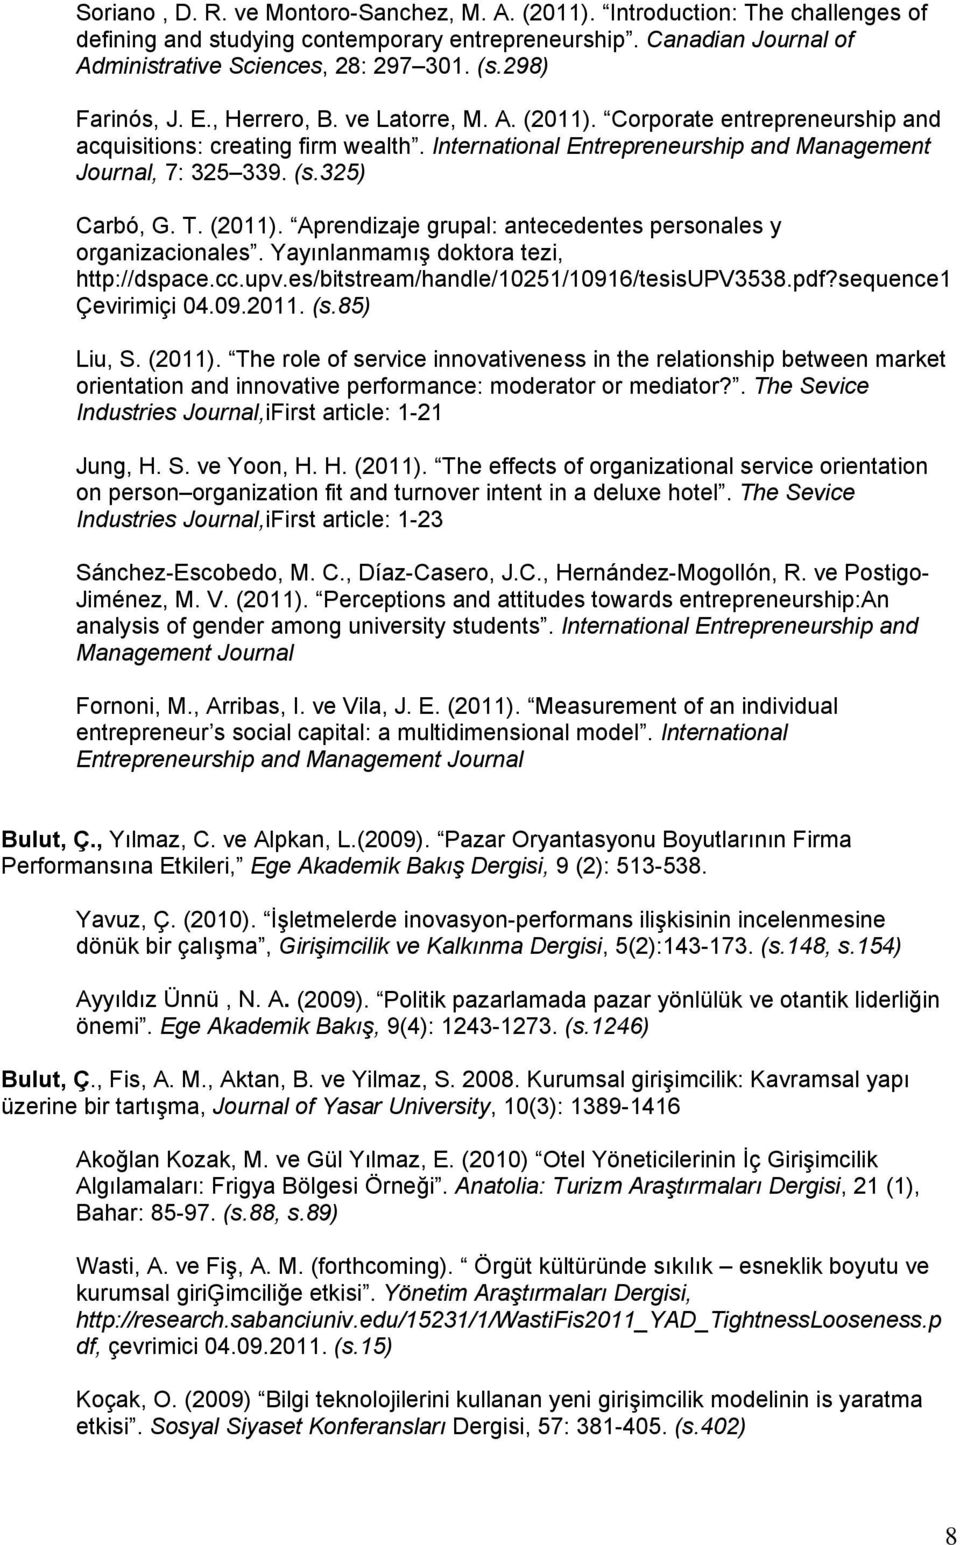 325) Carbó, G. T. (2011). Aprendizaje grupal: antecedentes personales y organizacionales. Yayınlanmamış doktora tezi, http://dspace.cc.upv.es/bitstream/handle/10251/10916/tesisupv3538.pdf?